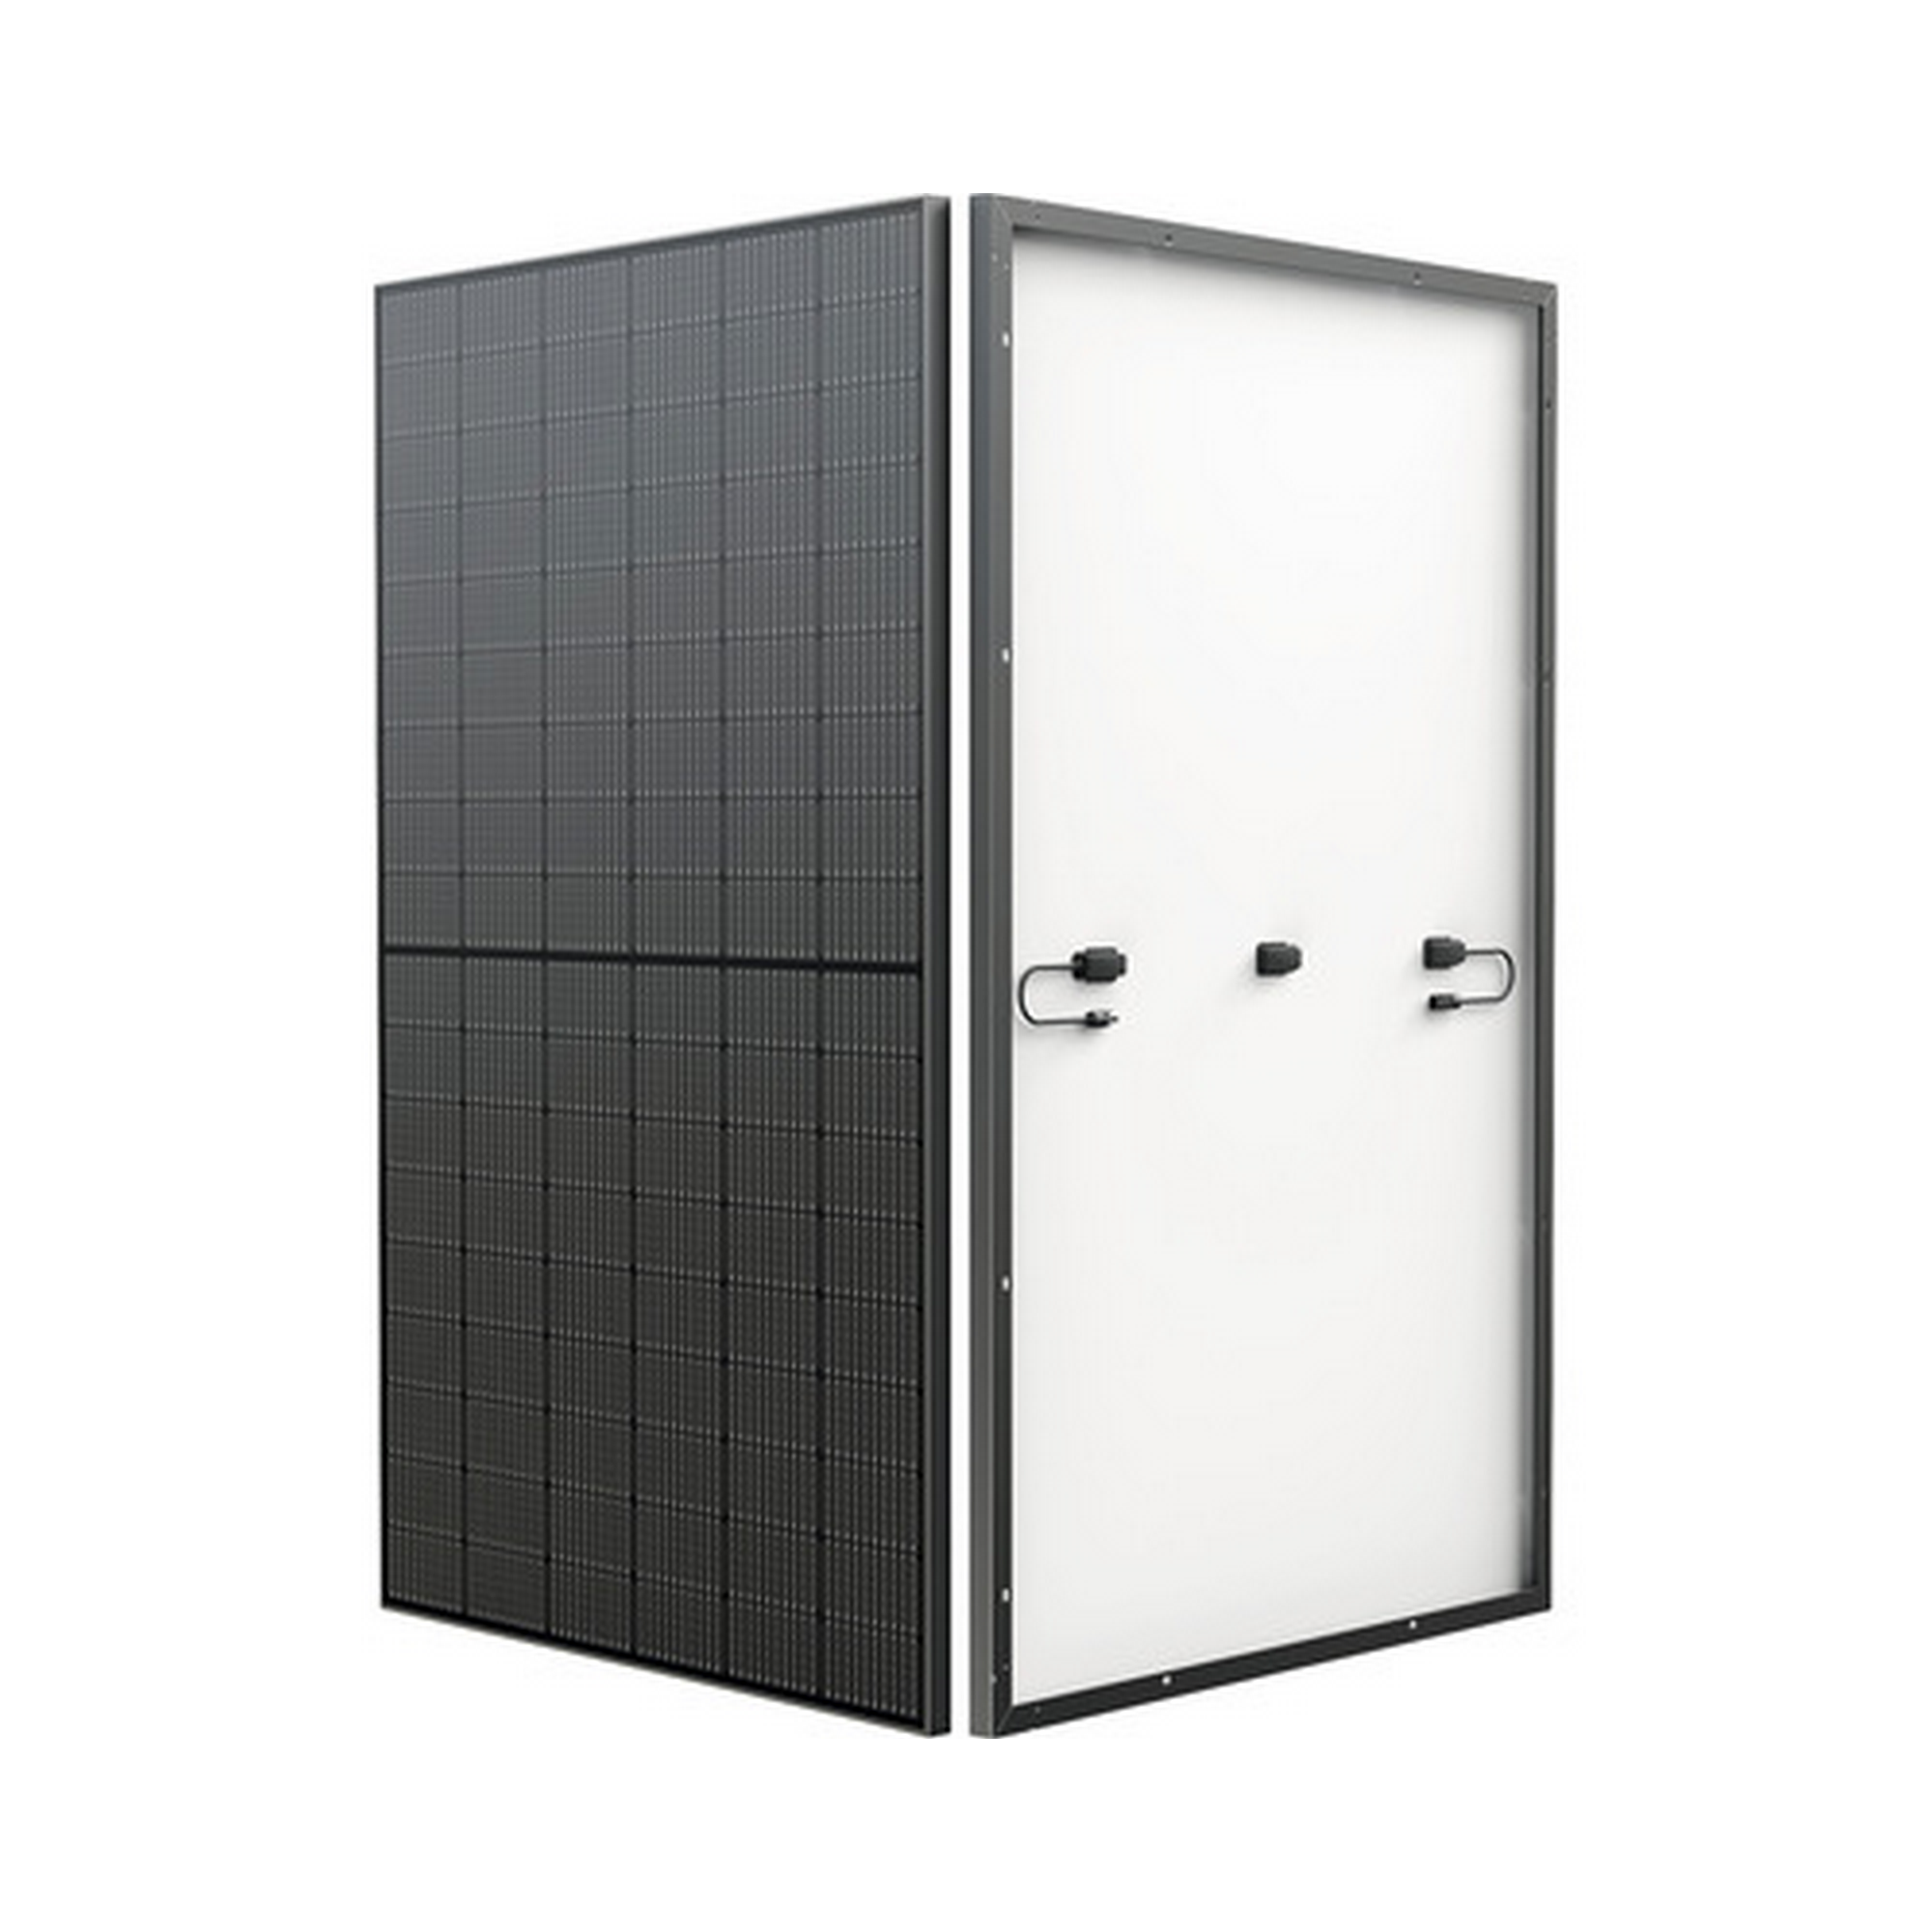 Solarmodule 2 x 400 W starr inklusive 4 Montagefüße + product picture